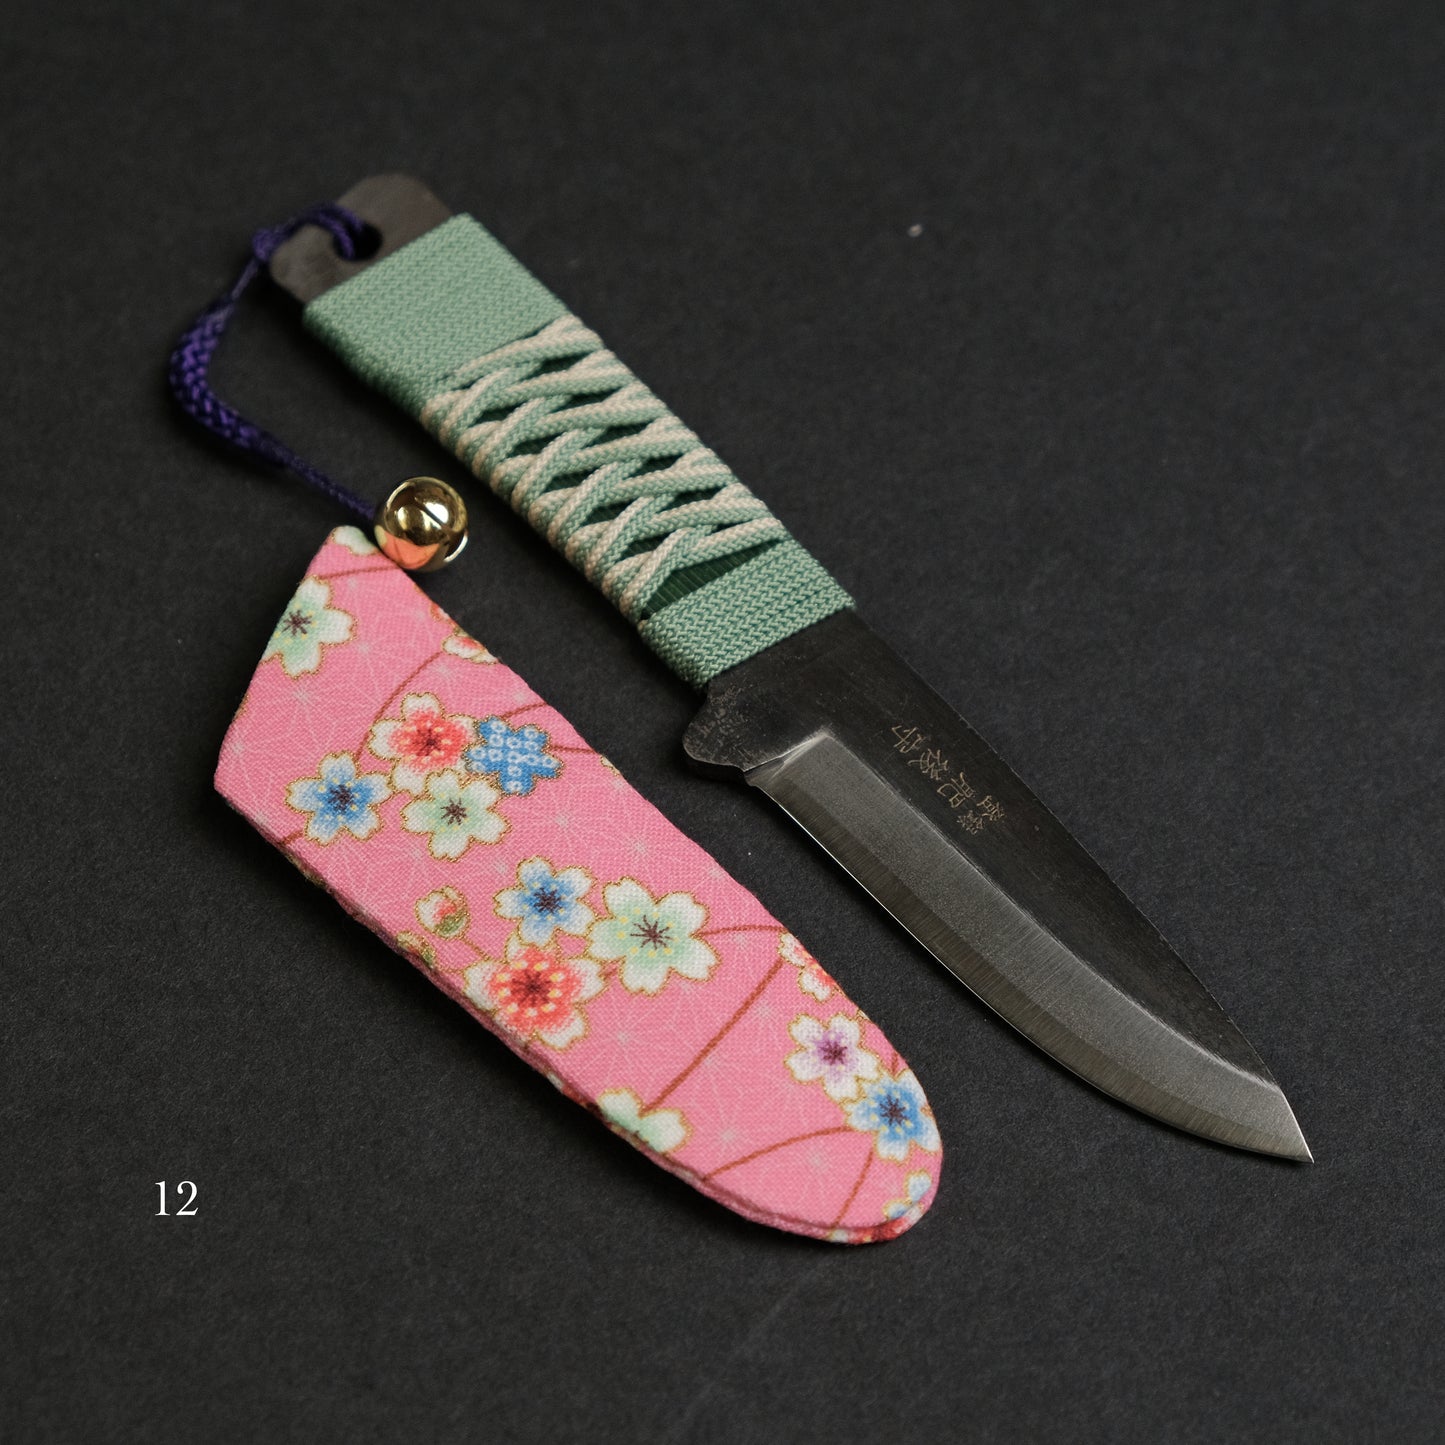 Higonokami Kogatana Fixed Blade 155mm (Various Color)